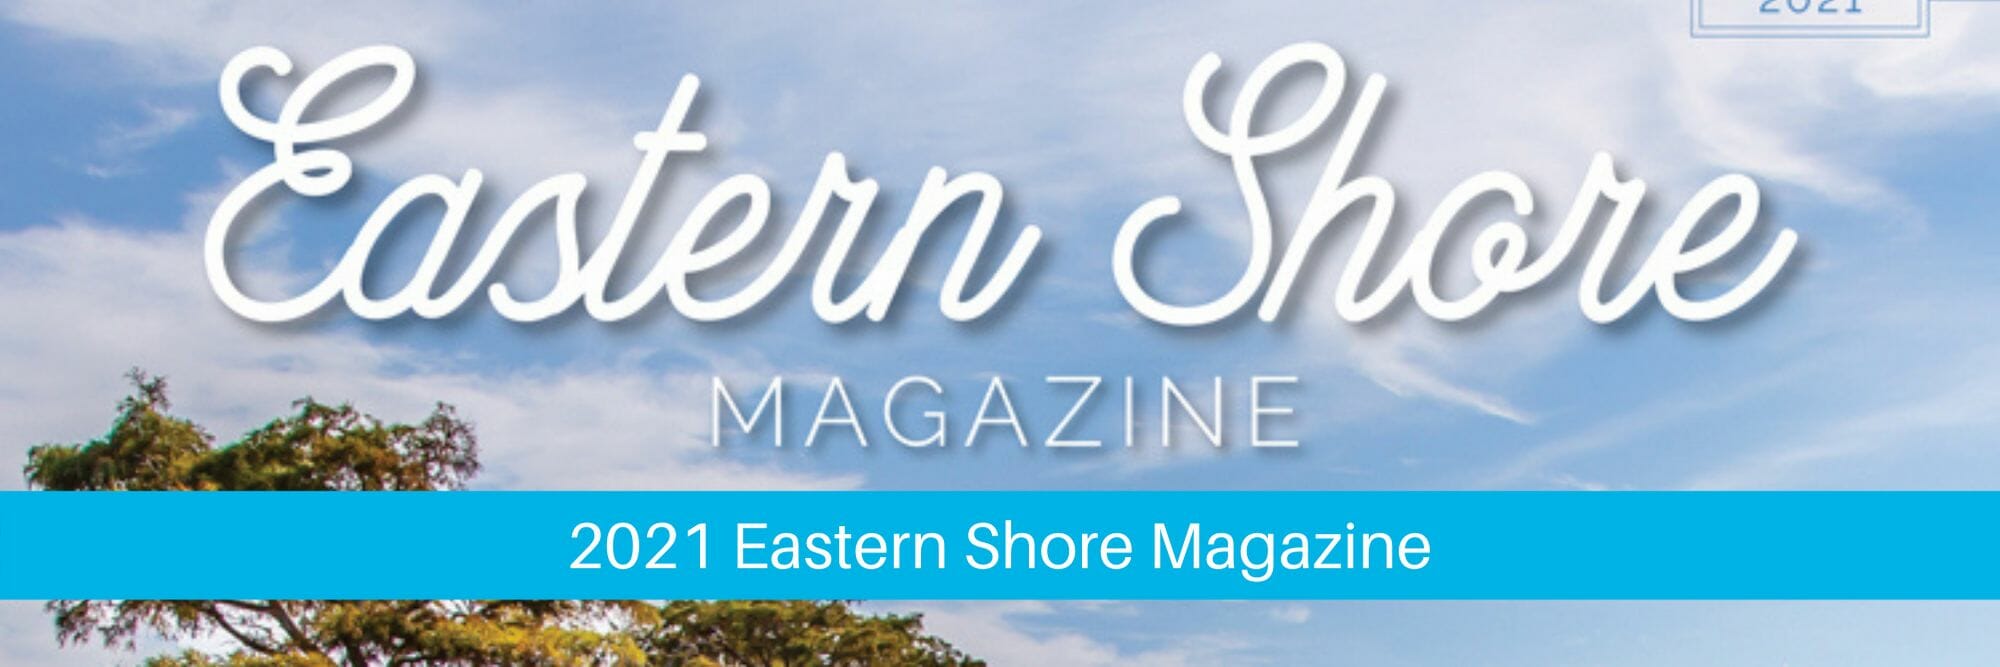 Eastern Shore Magazine